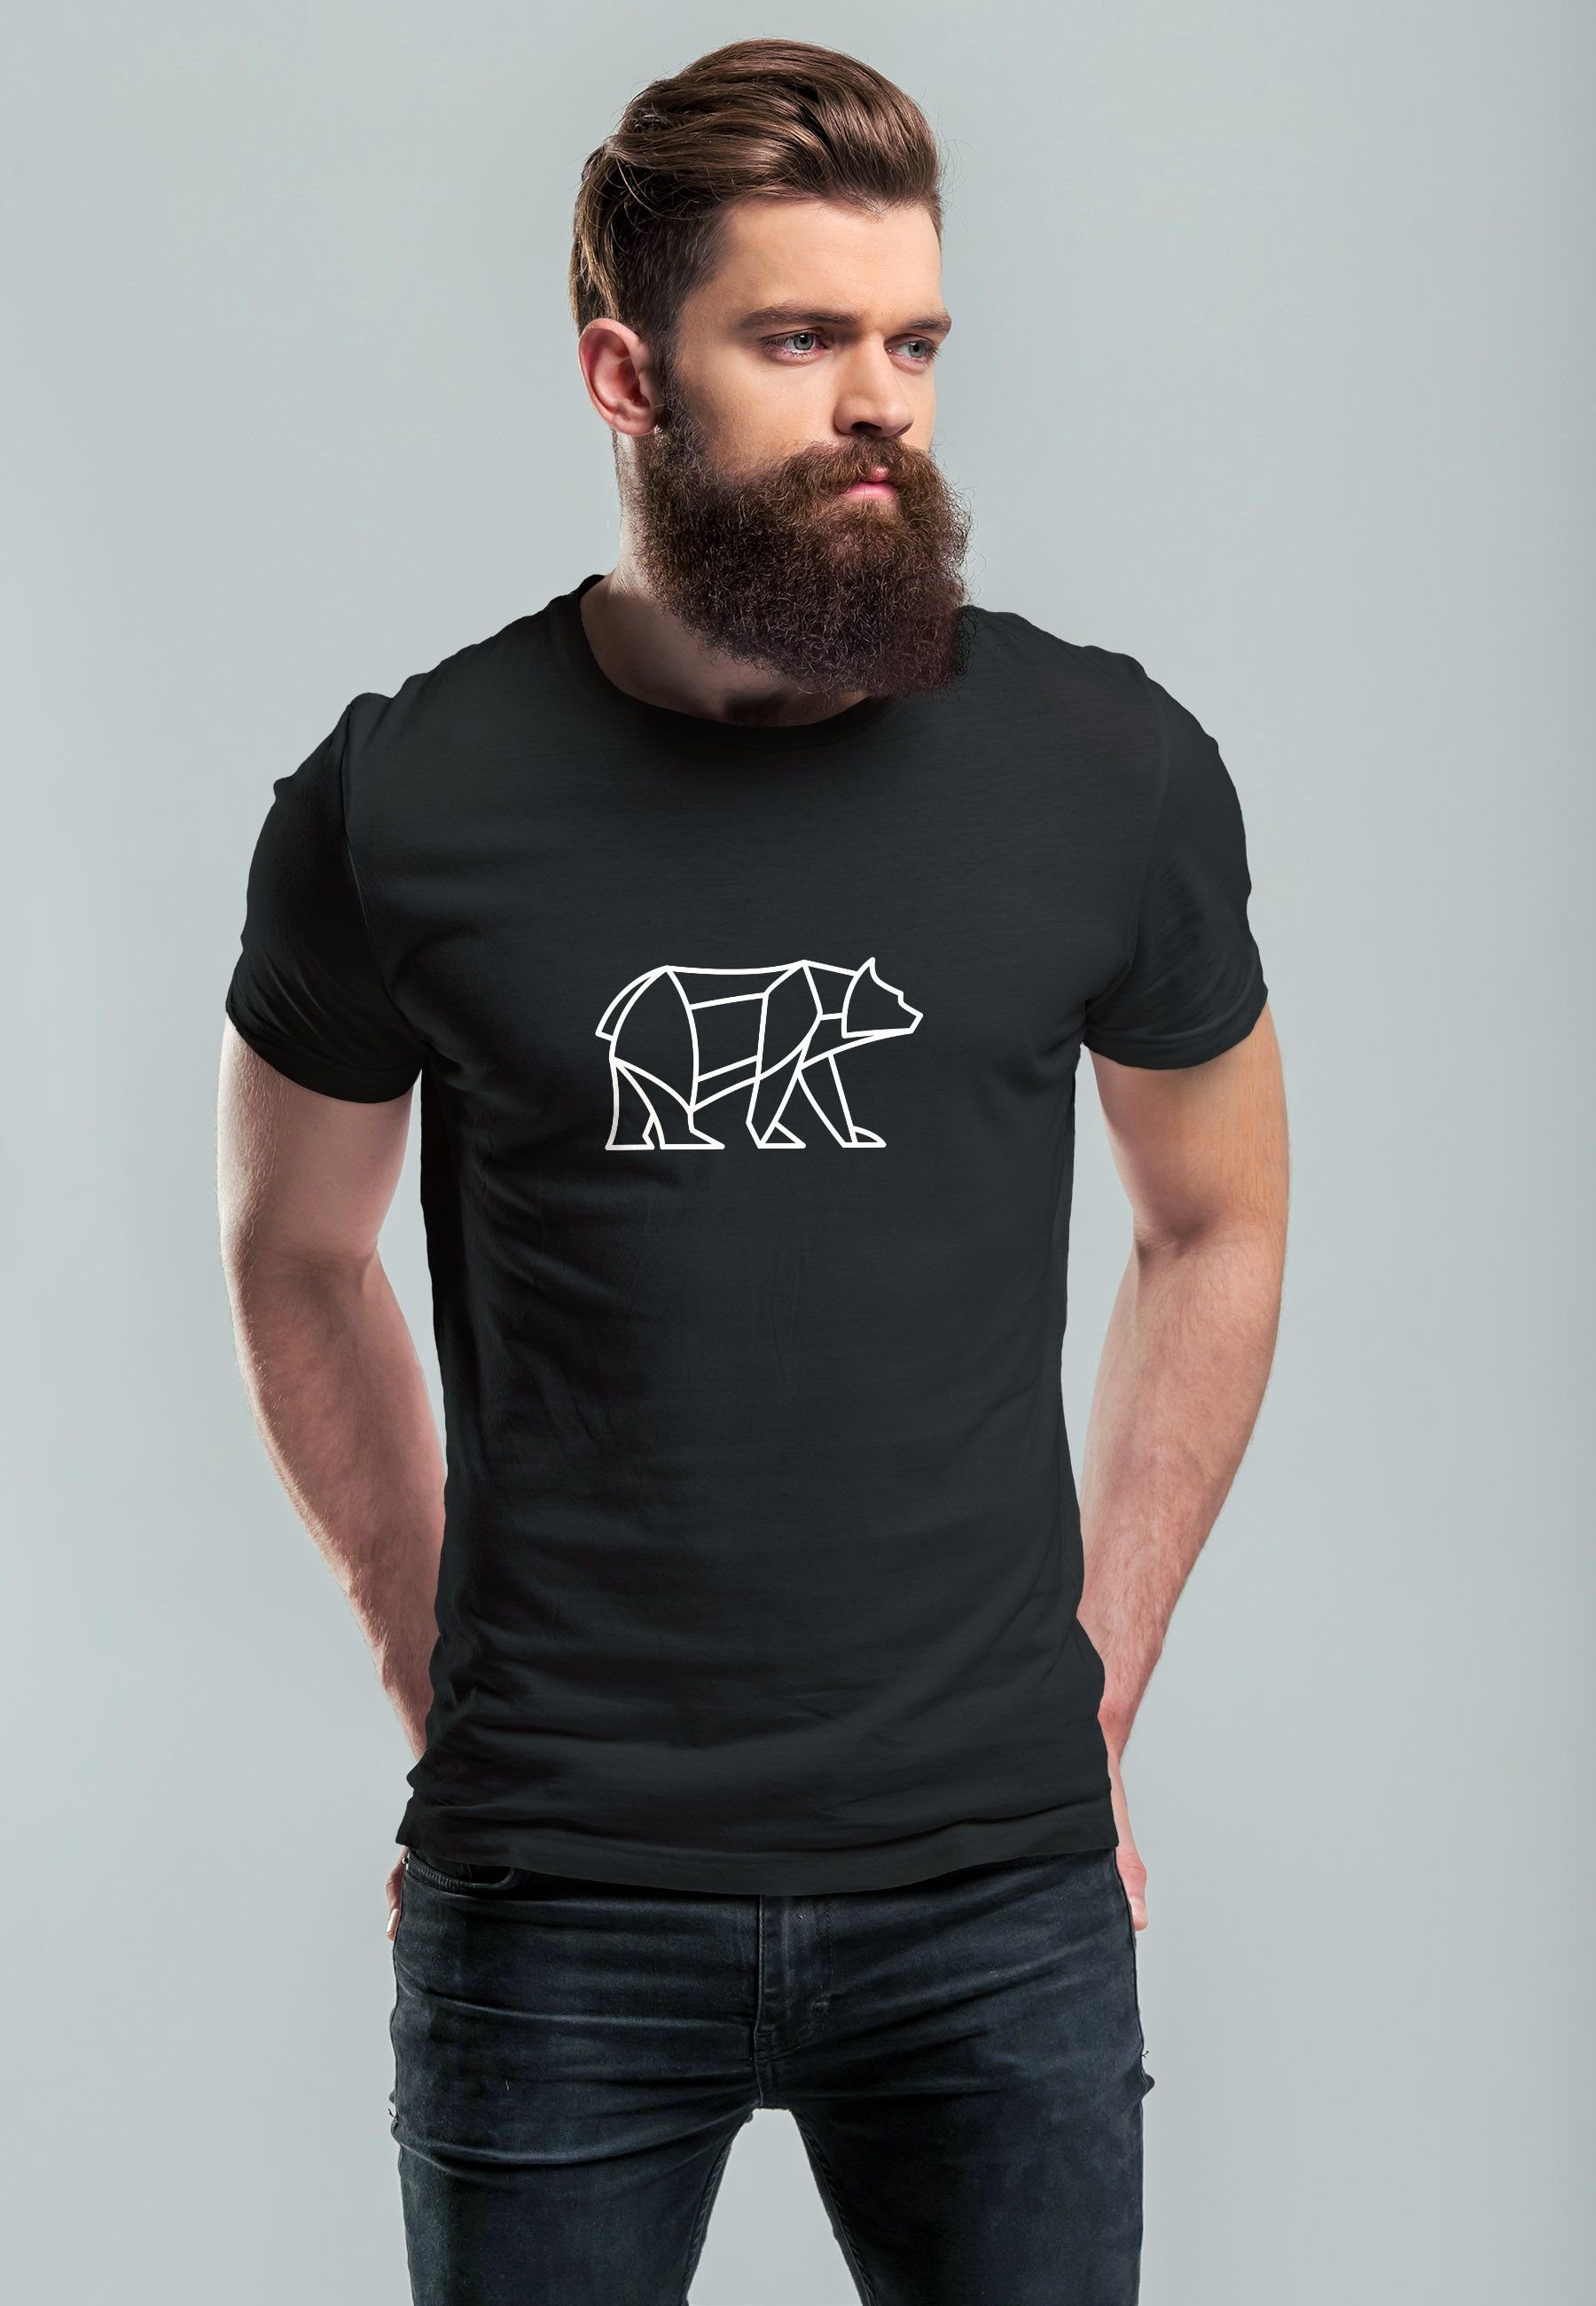 T-Shirt 2 Design Polygon Print-Shirt Fashion Herren schwarz Print Bear Outdoor Polygon Tiermotiv Bär Print mit Neverless